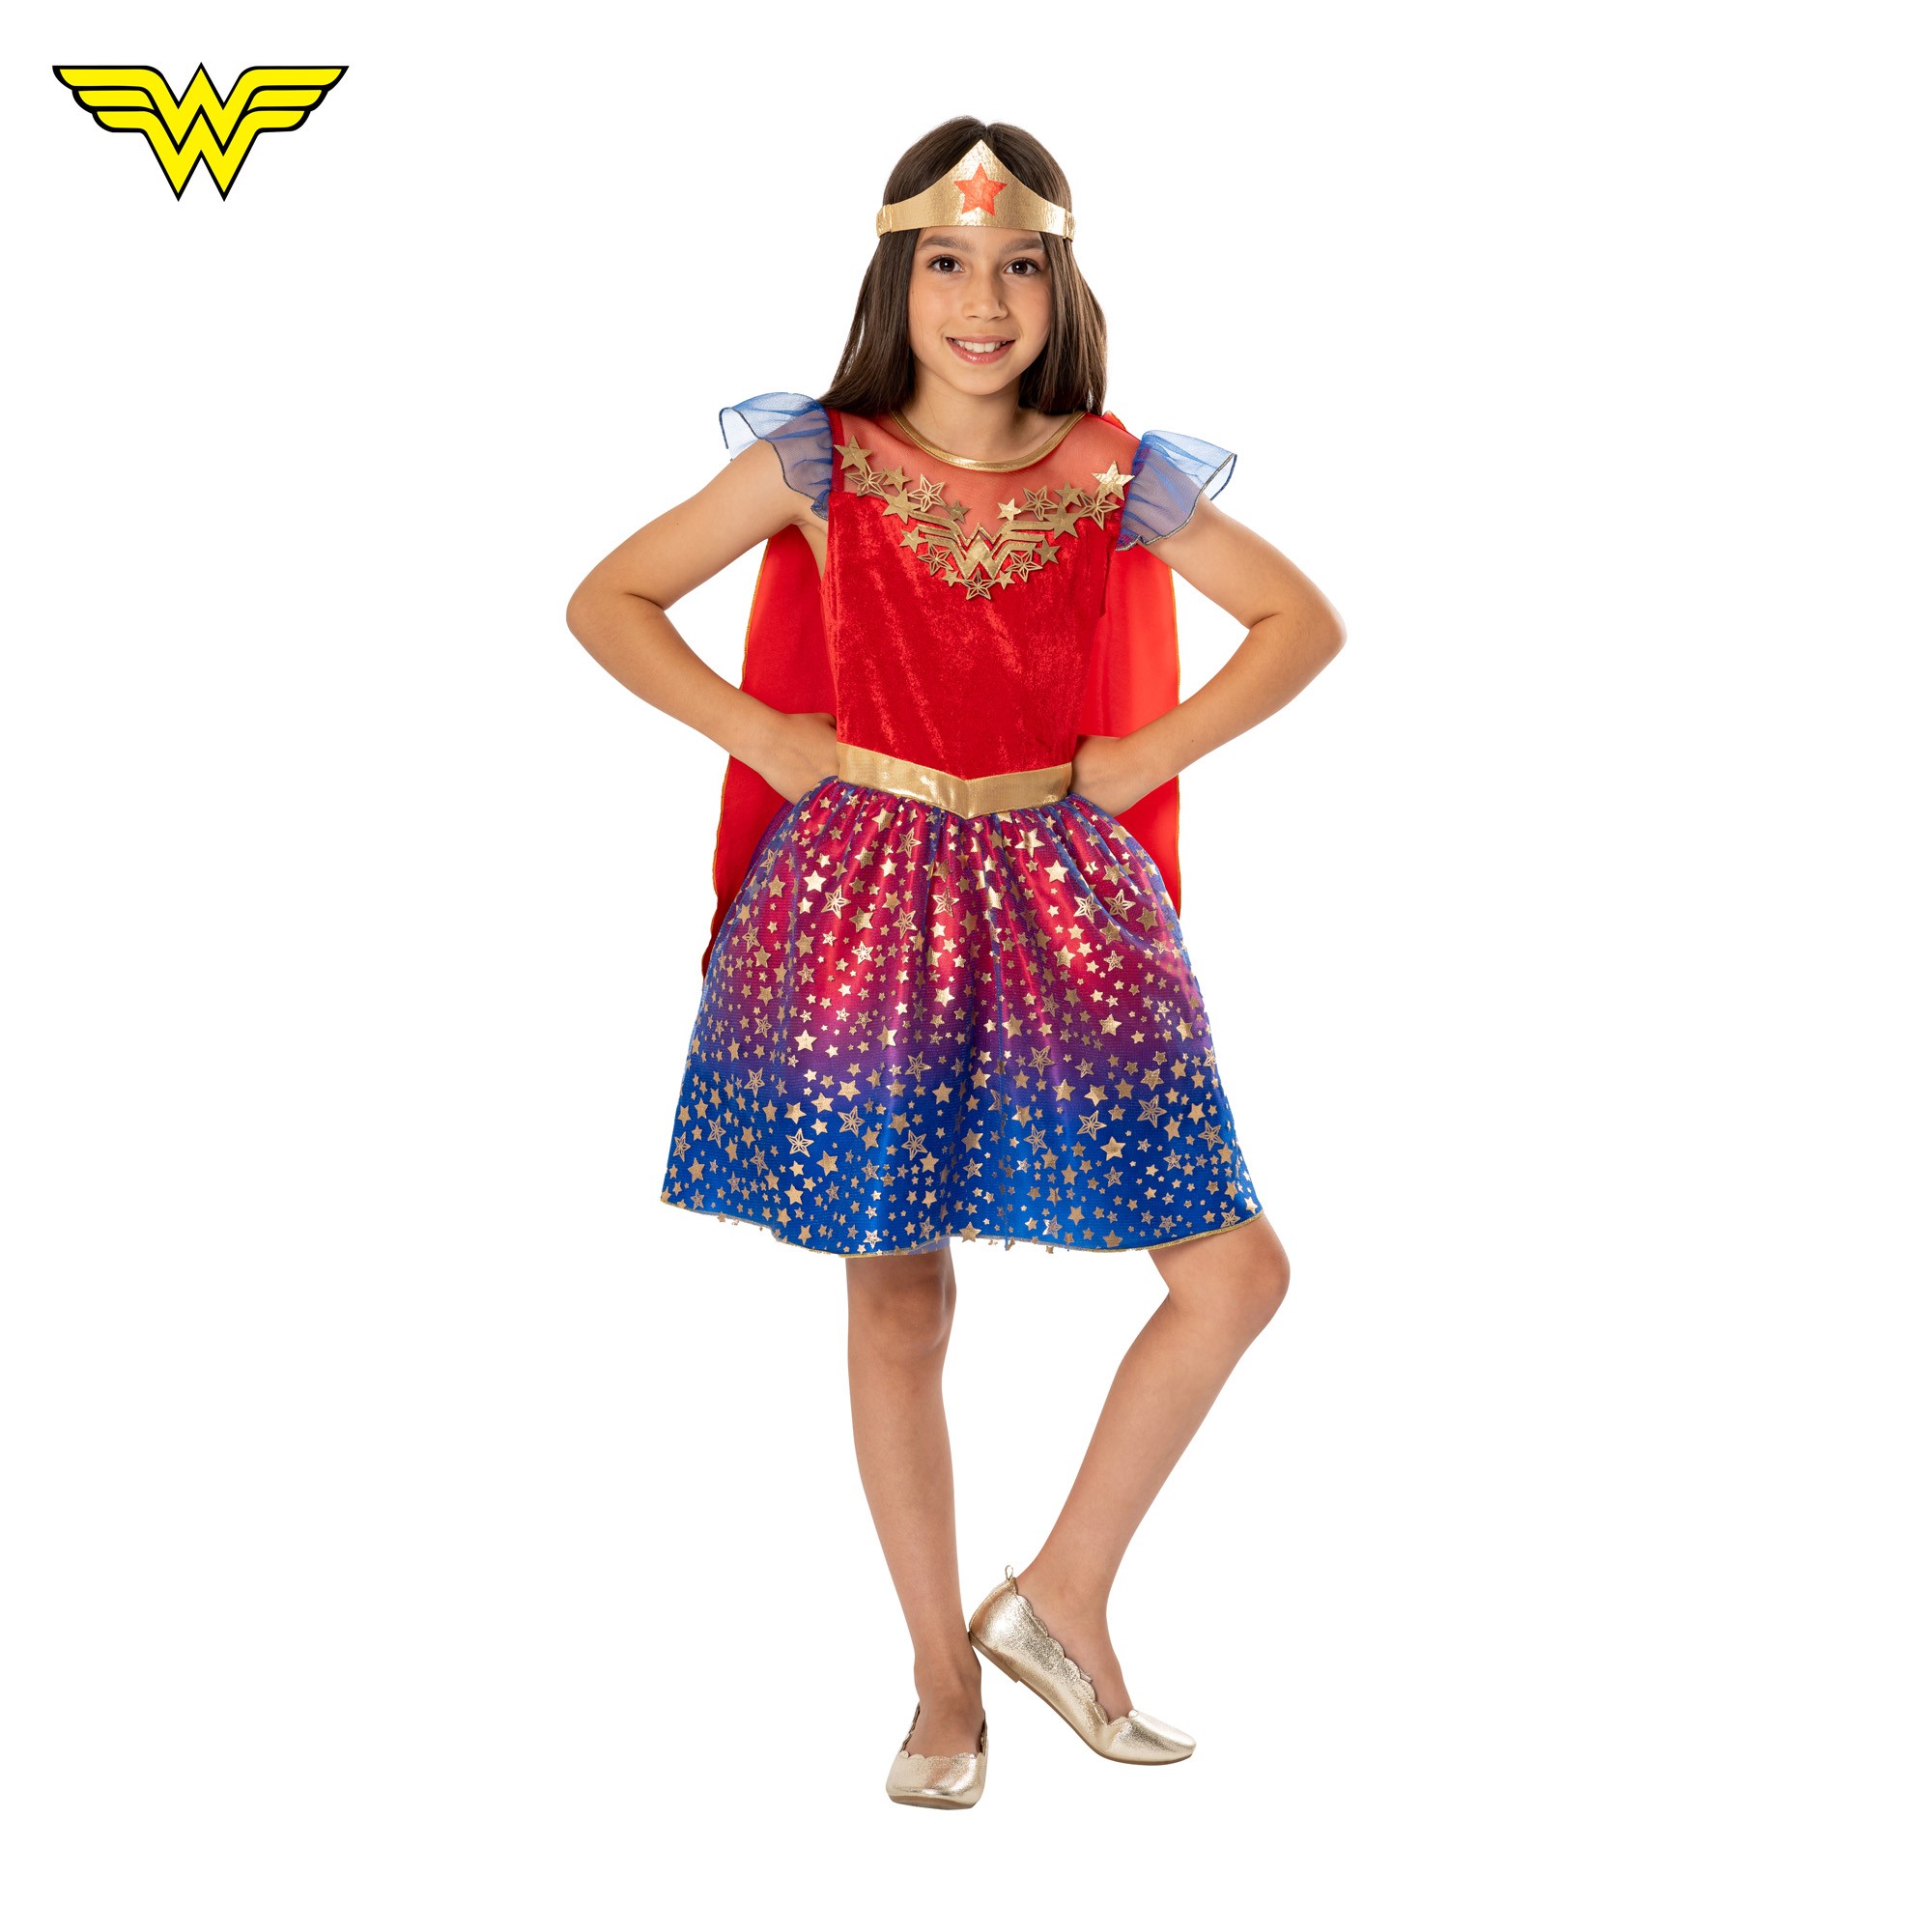 Costume Carnevale Travestimento Wonder Woman Originale DC Comics Ciao  Bambina